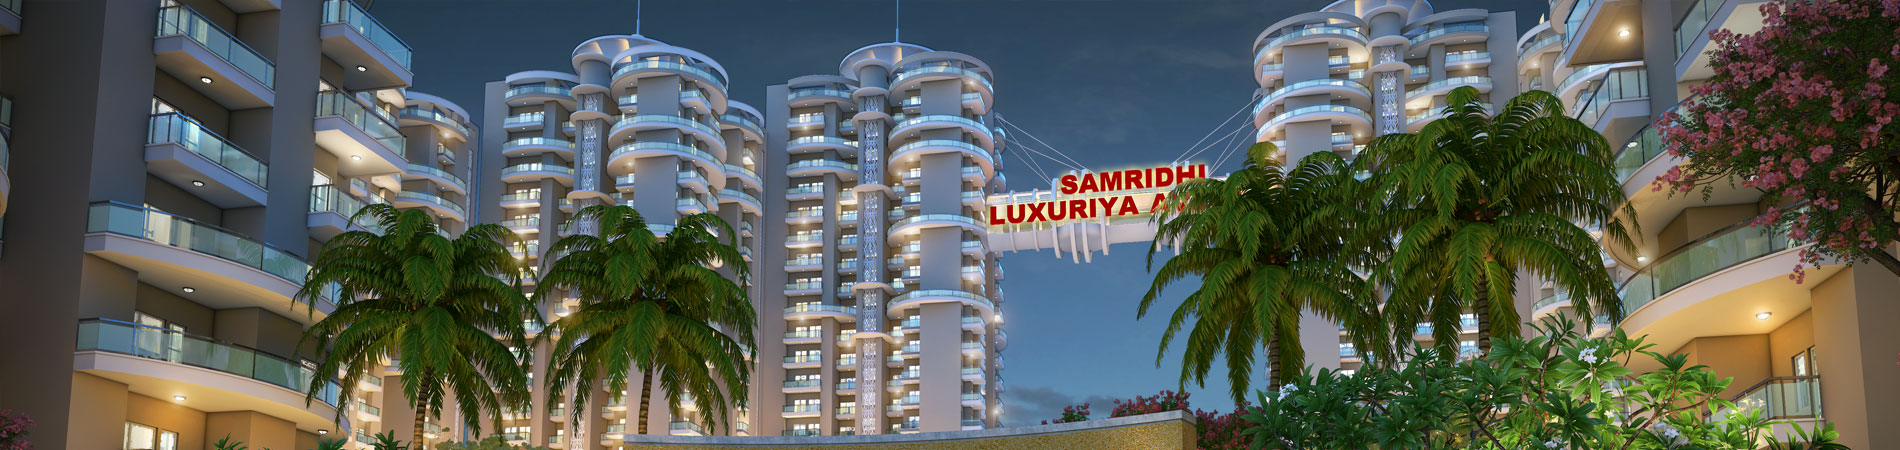 upcoming projects in noida 150 - samridhi luxuriya avenue